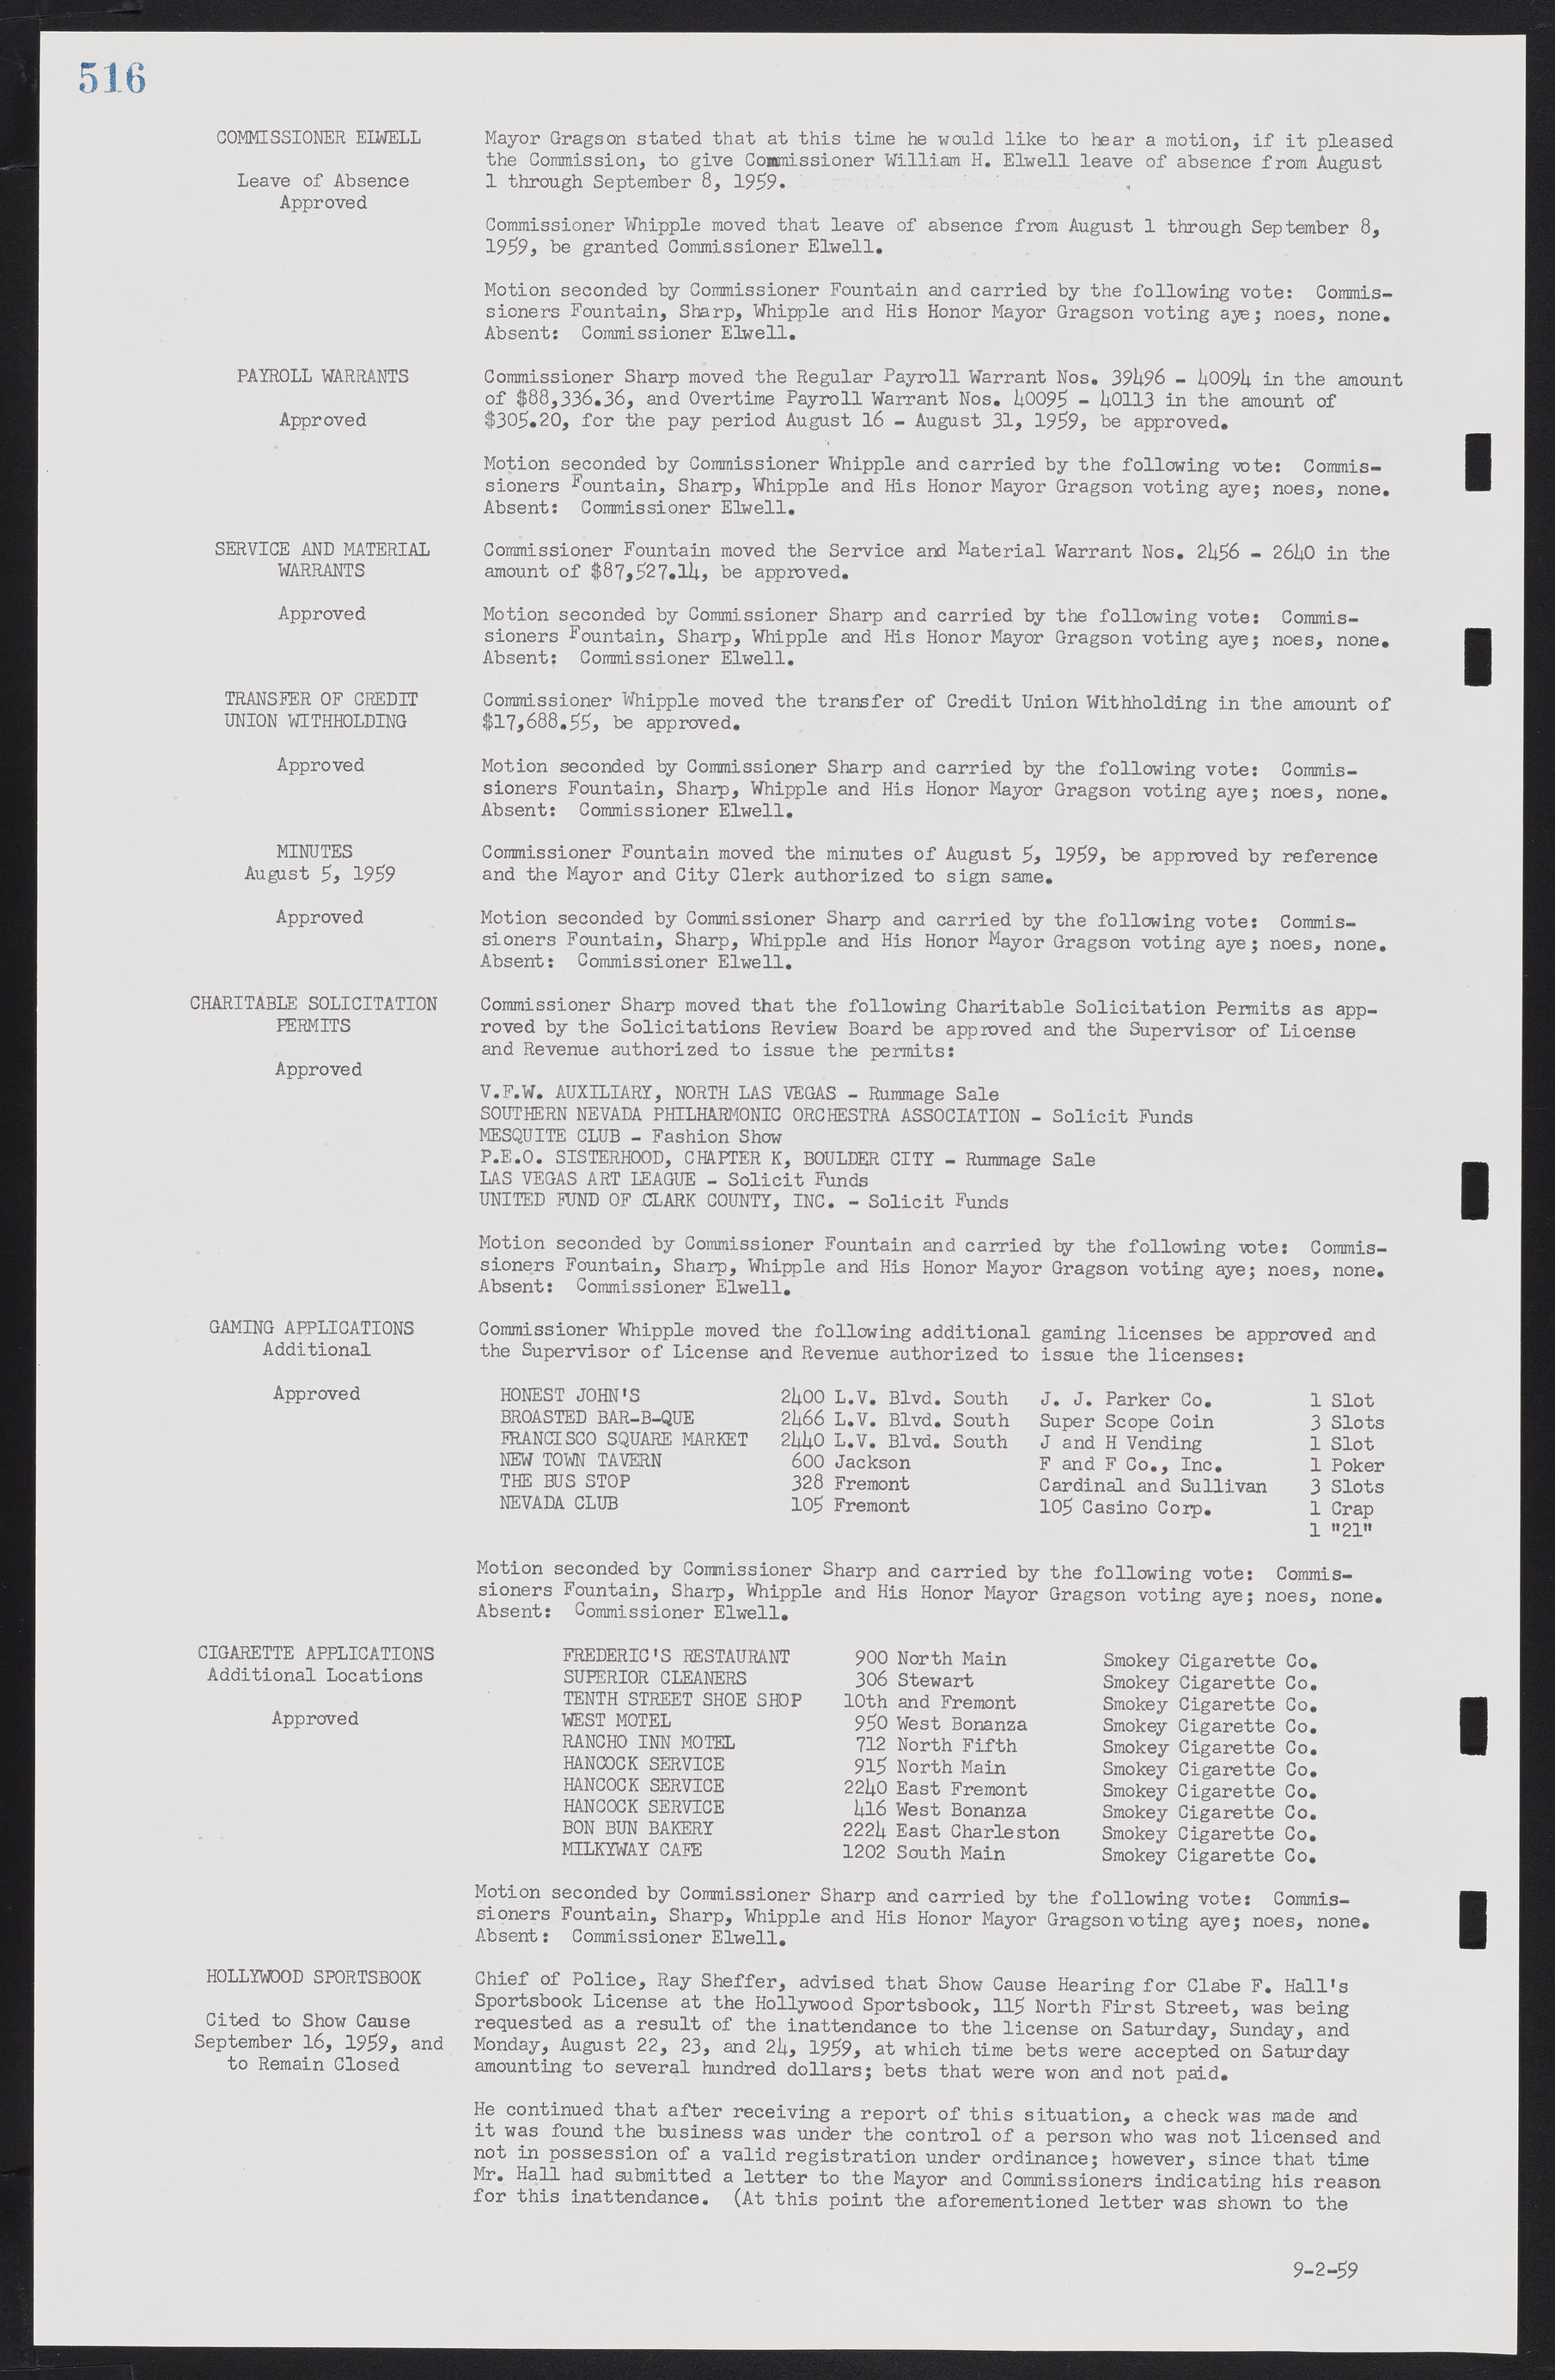 Las Vegas City Commission Minutes, November 20, 1957 to December 2, 1959, lvc000011-552